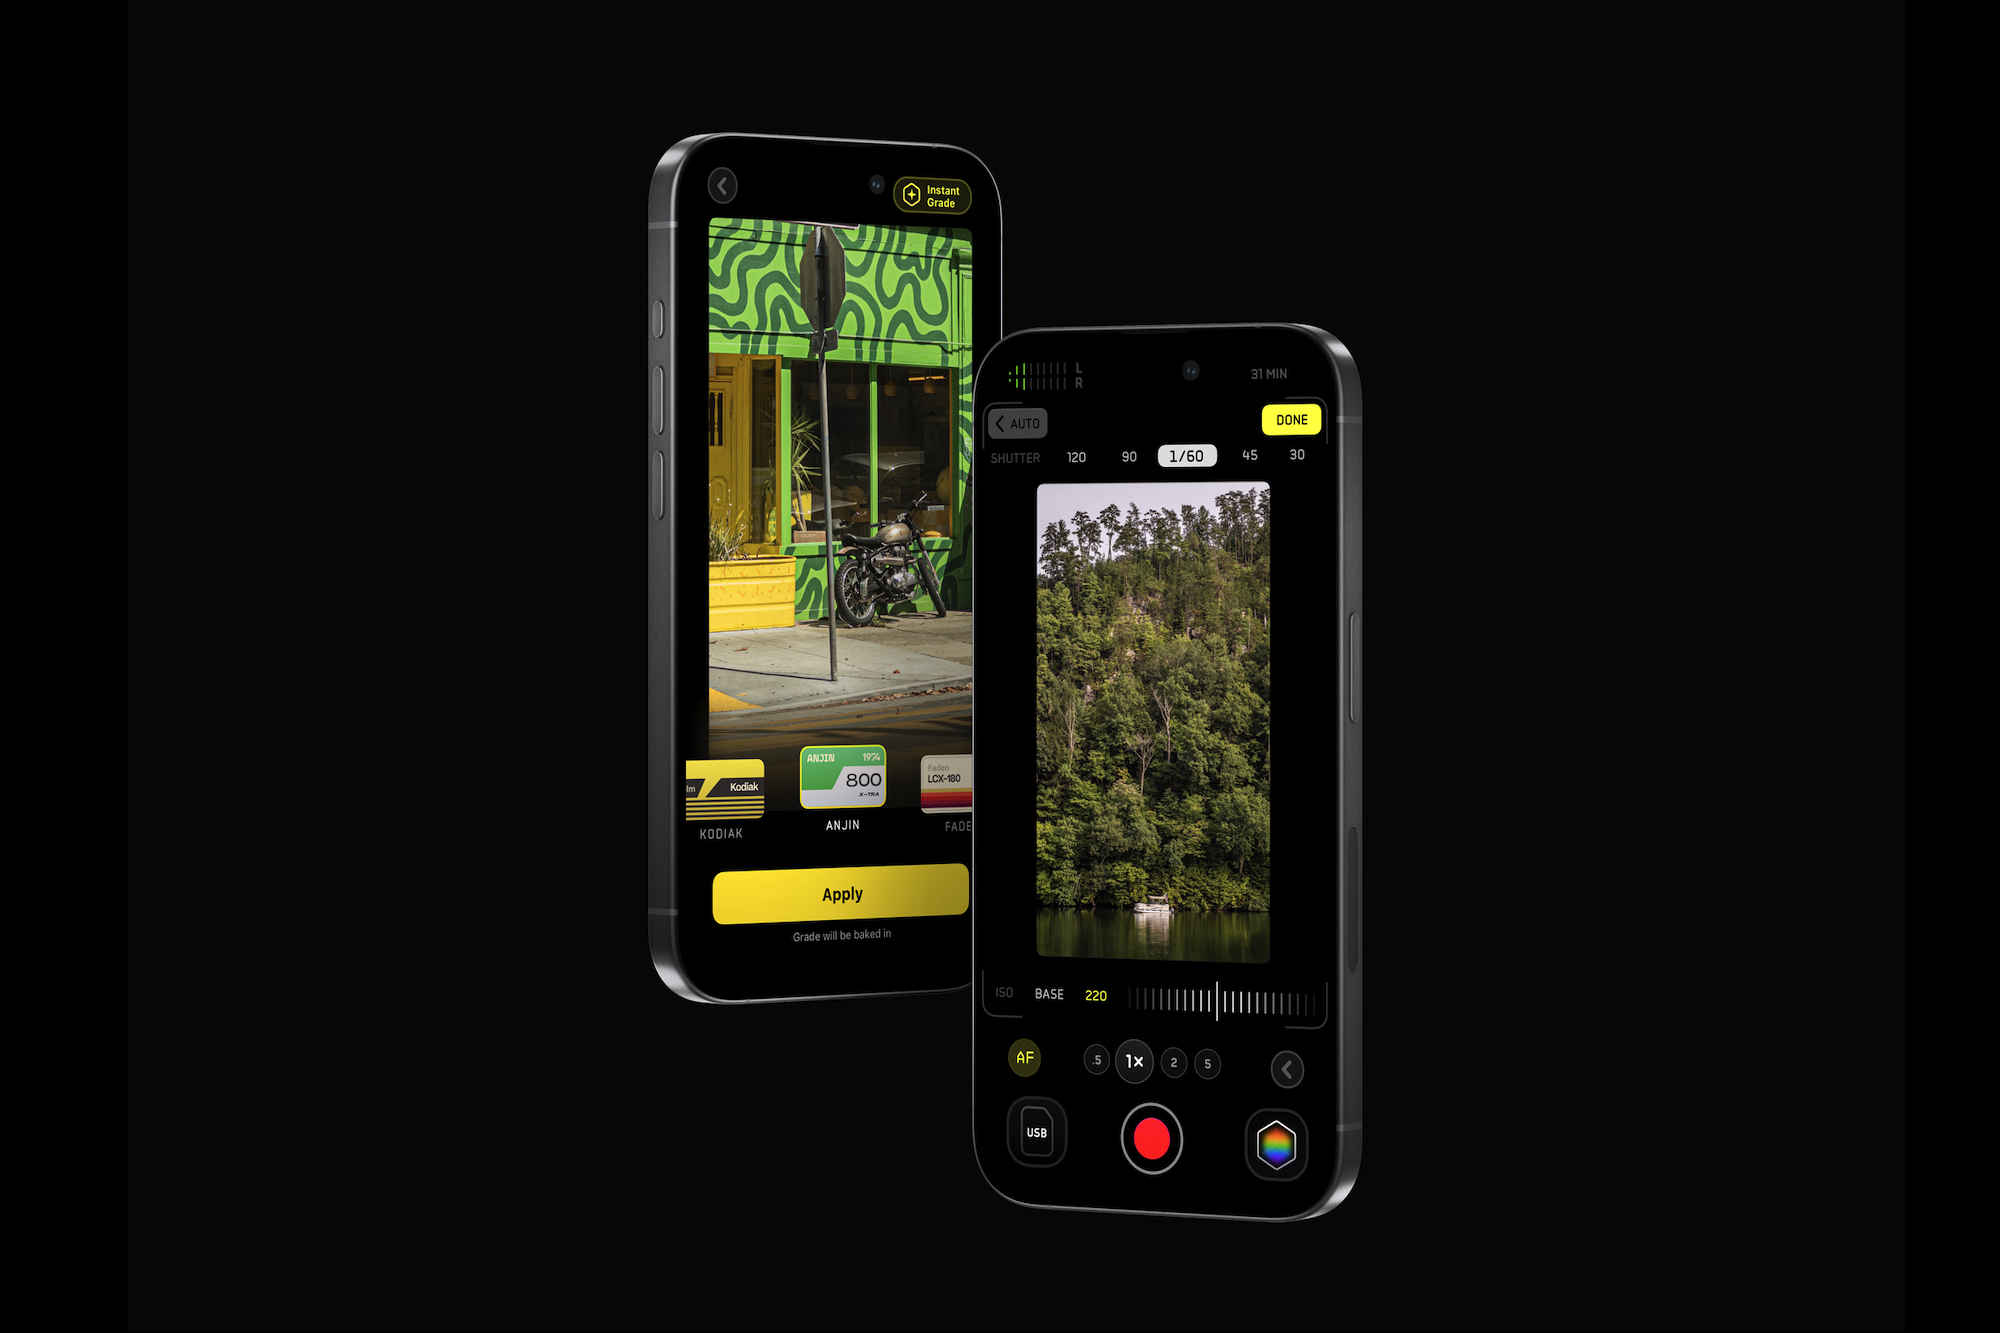 Capturas de pantalla de la aplicación Kino.